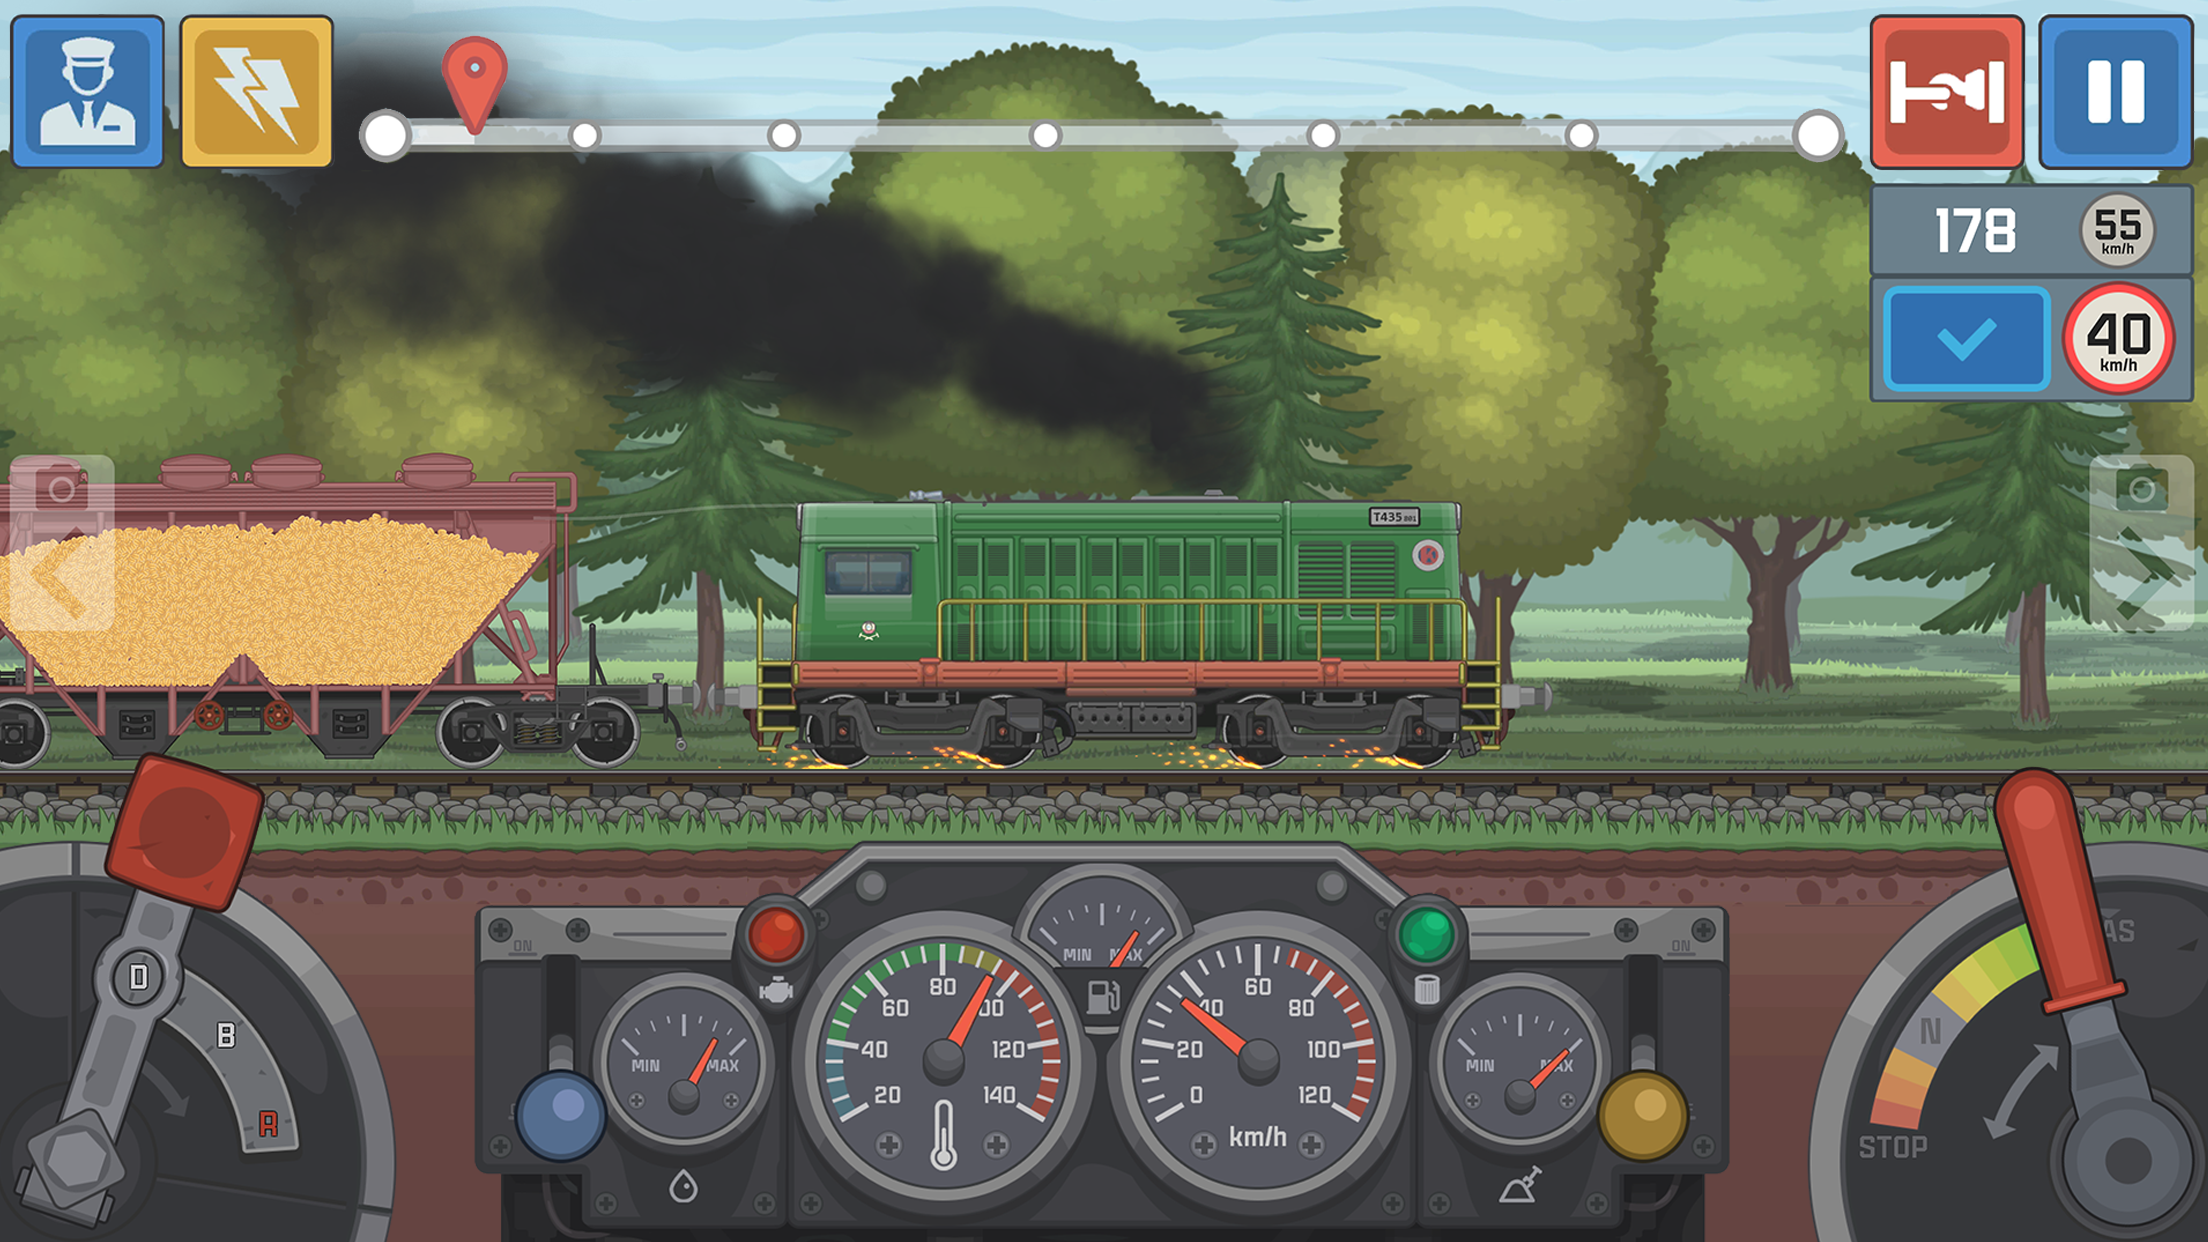 Train Simulator MOD APK 0.3.3 (Unlimited Money)